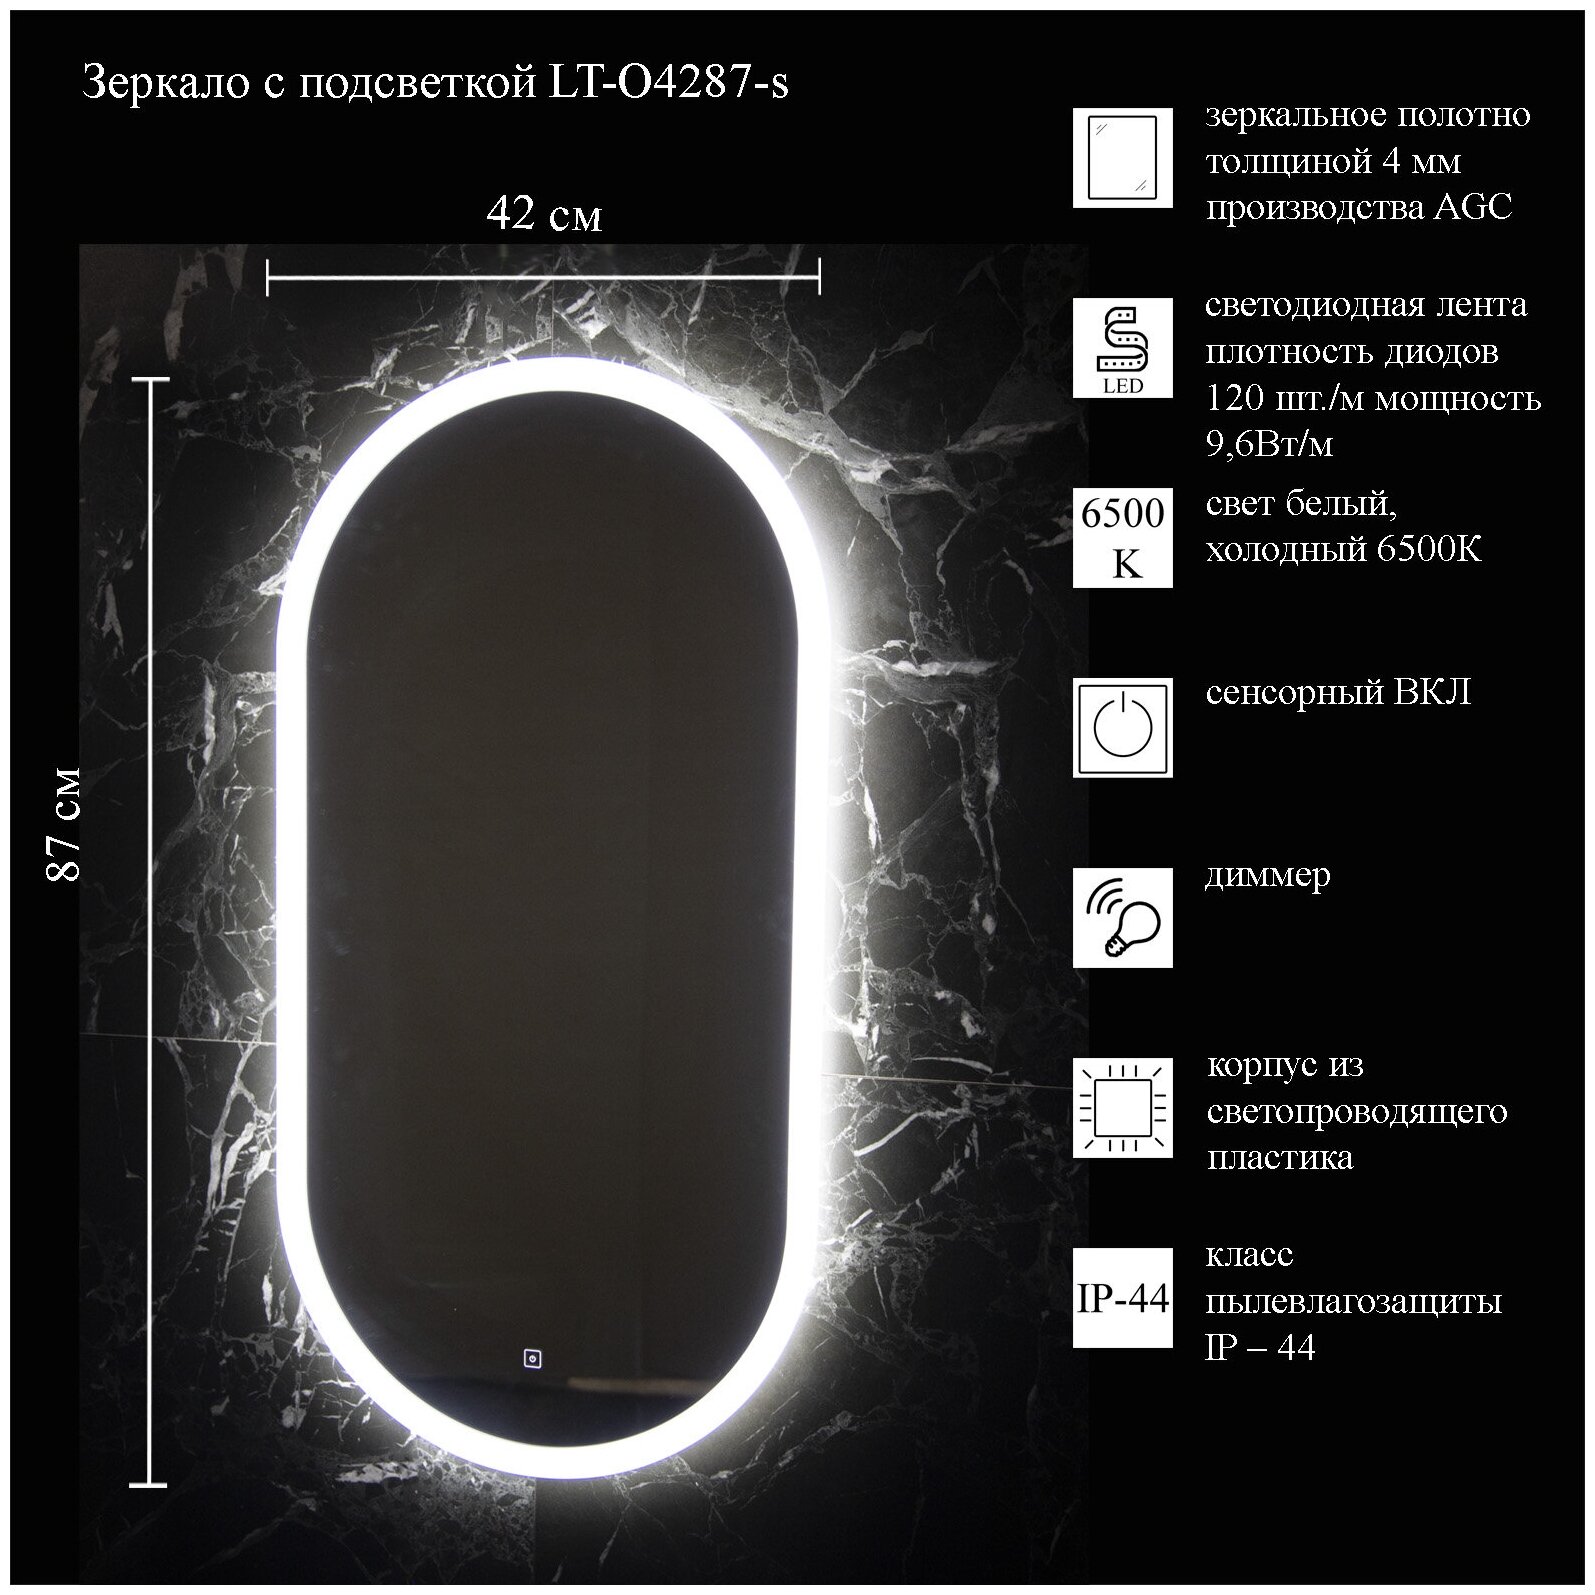 Зеркало La Tezza с LED подсветкой, сенсорный включатель с диммером, IP - 44, 420х870 (ШВ) арт. LT-O4287-s